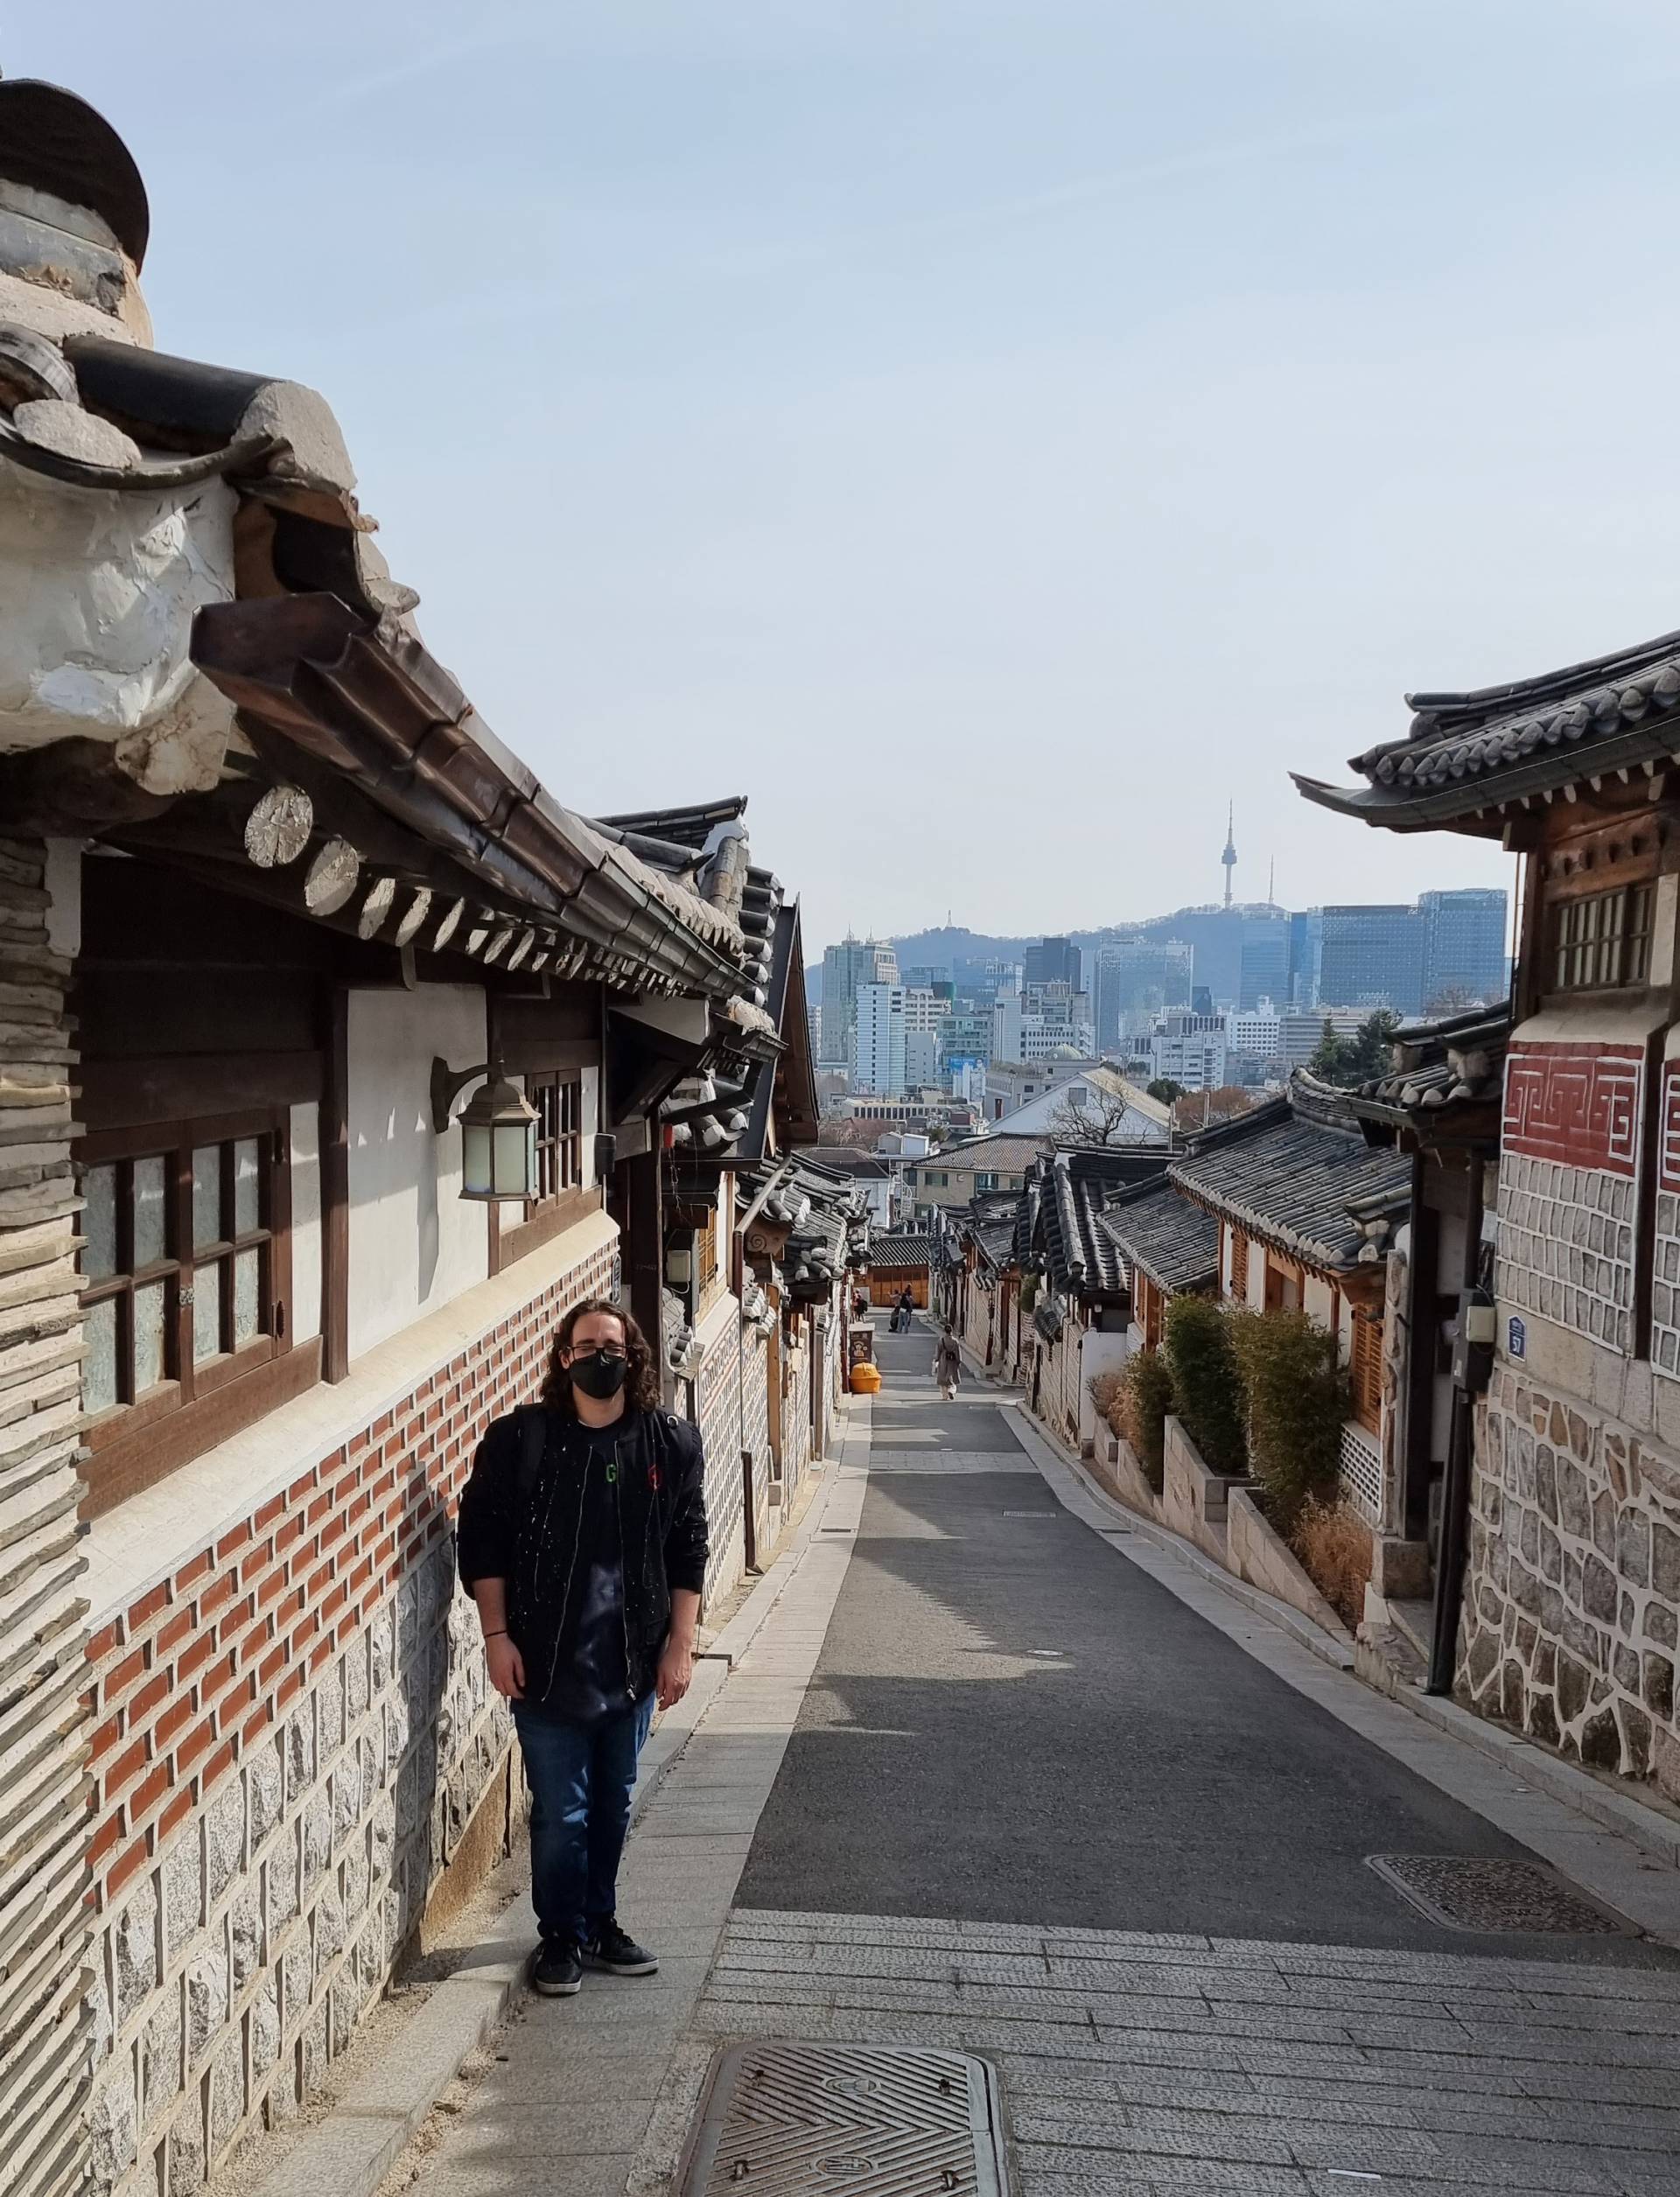 Seoul: Bukchon Hankok Village